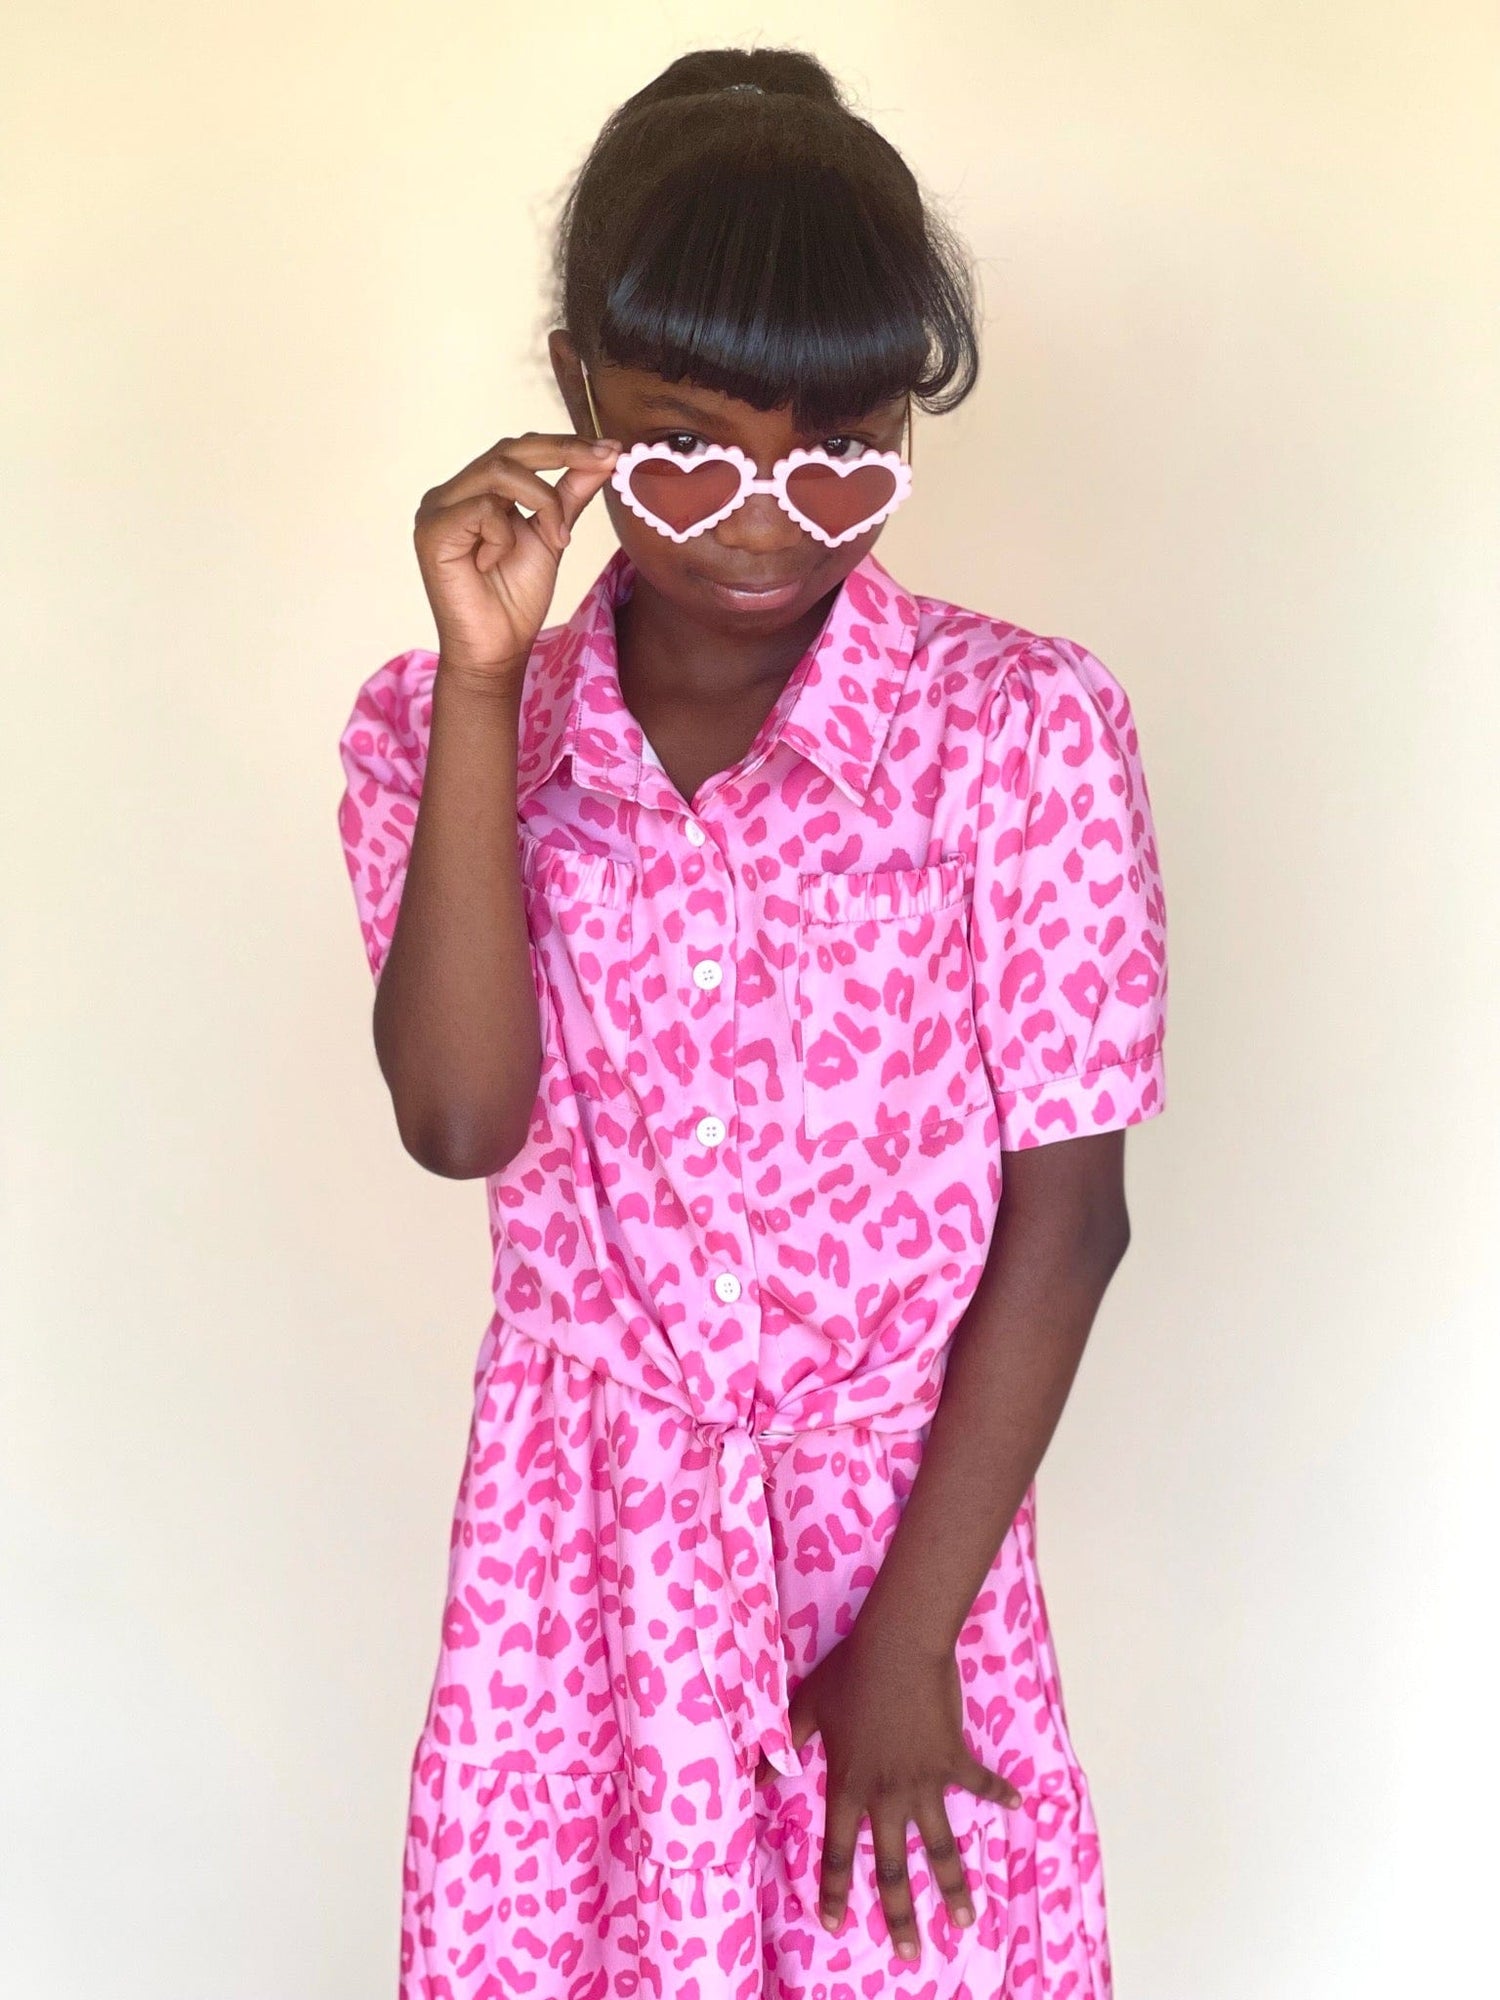 Fashionably, BBK! Outfit Sets Girls Pink Cheetah Print Set